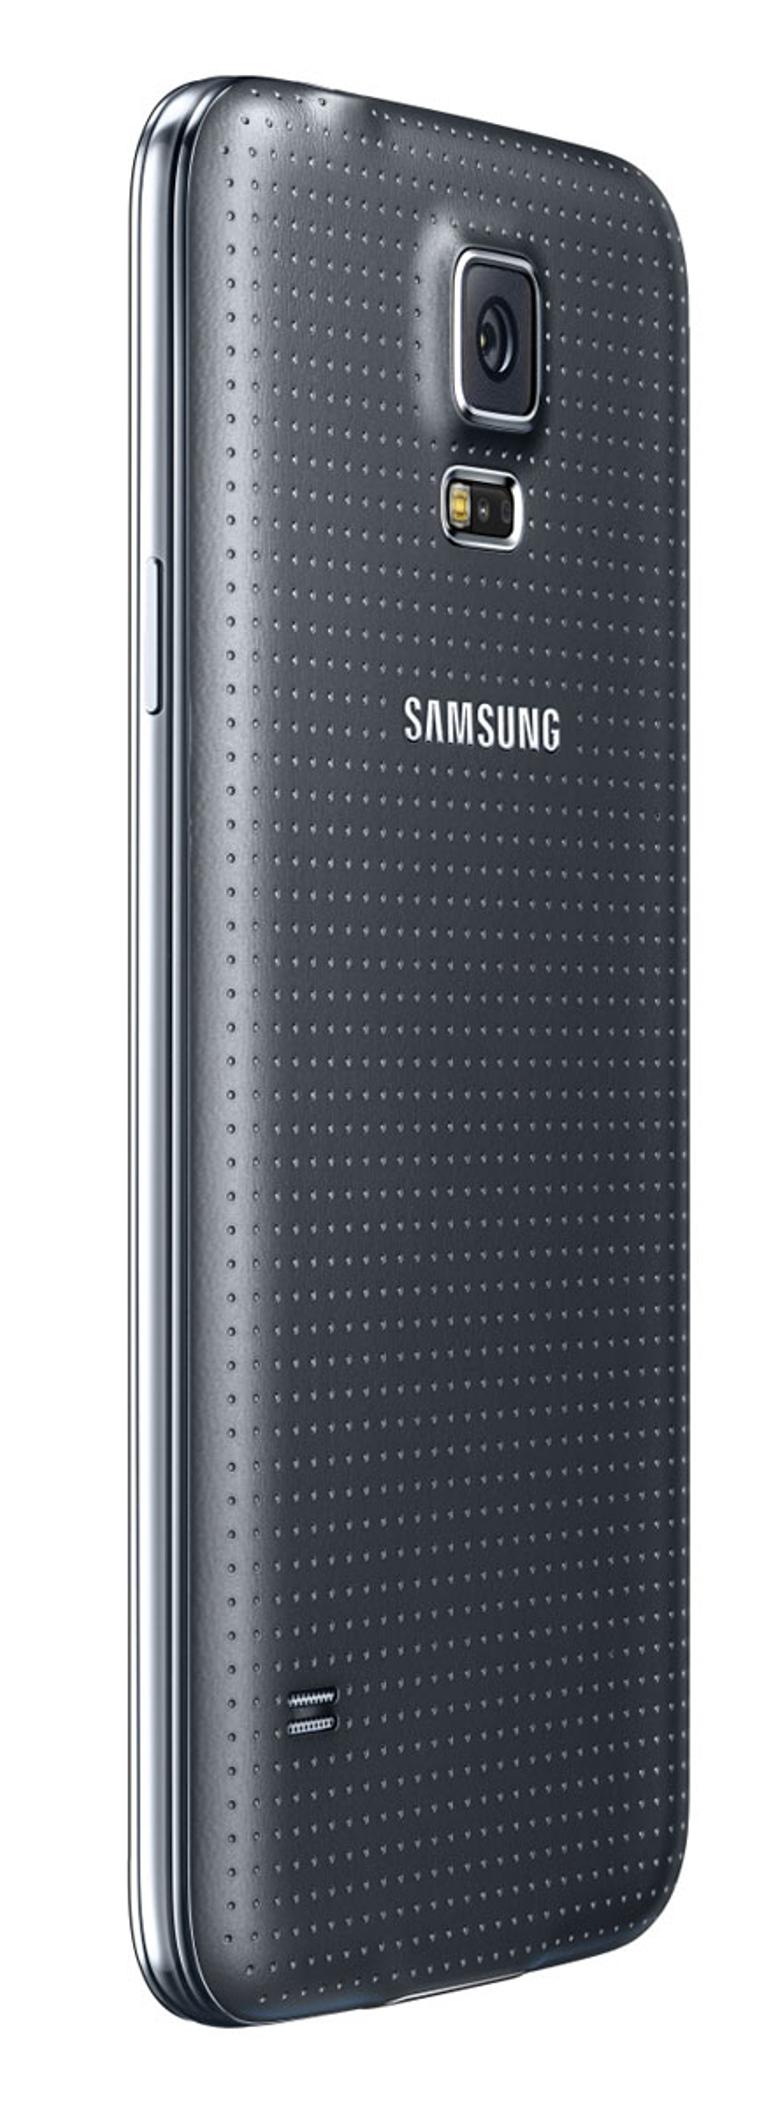 Samsung Galaxy S5 vista trasera lateral